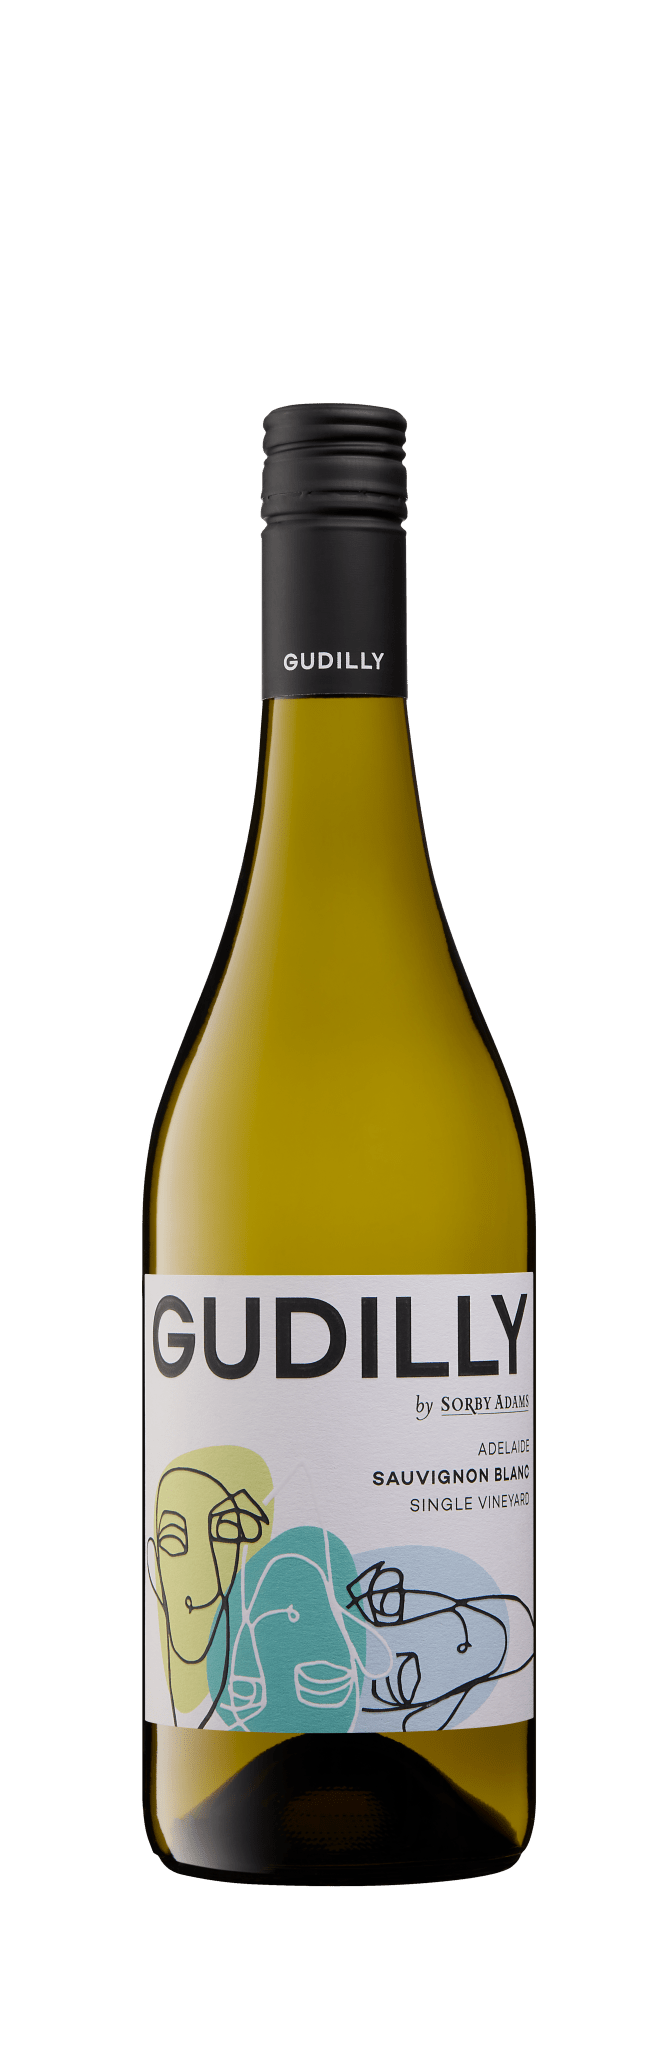 Gudilly Adelaide Sauvignon Blanc - Sauvignon Blanc - Sorby Adams Wines